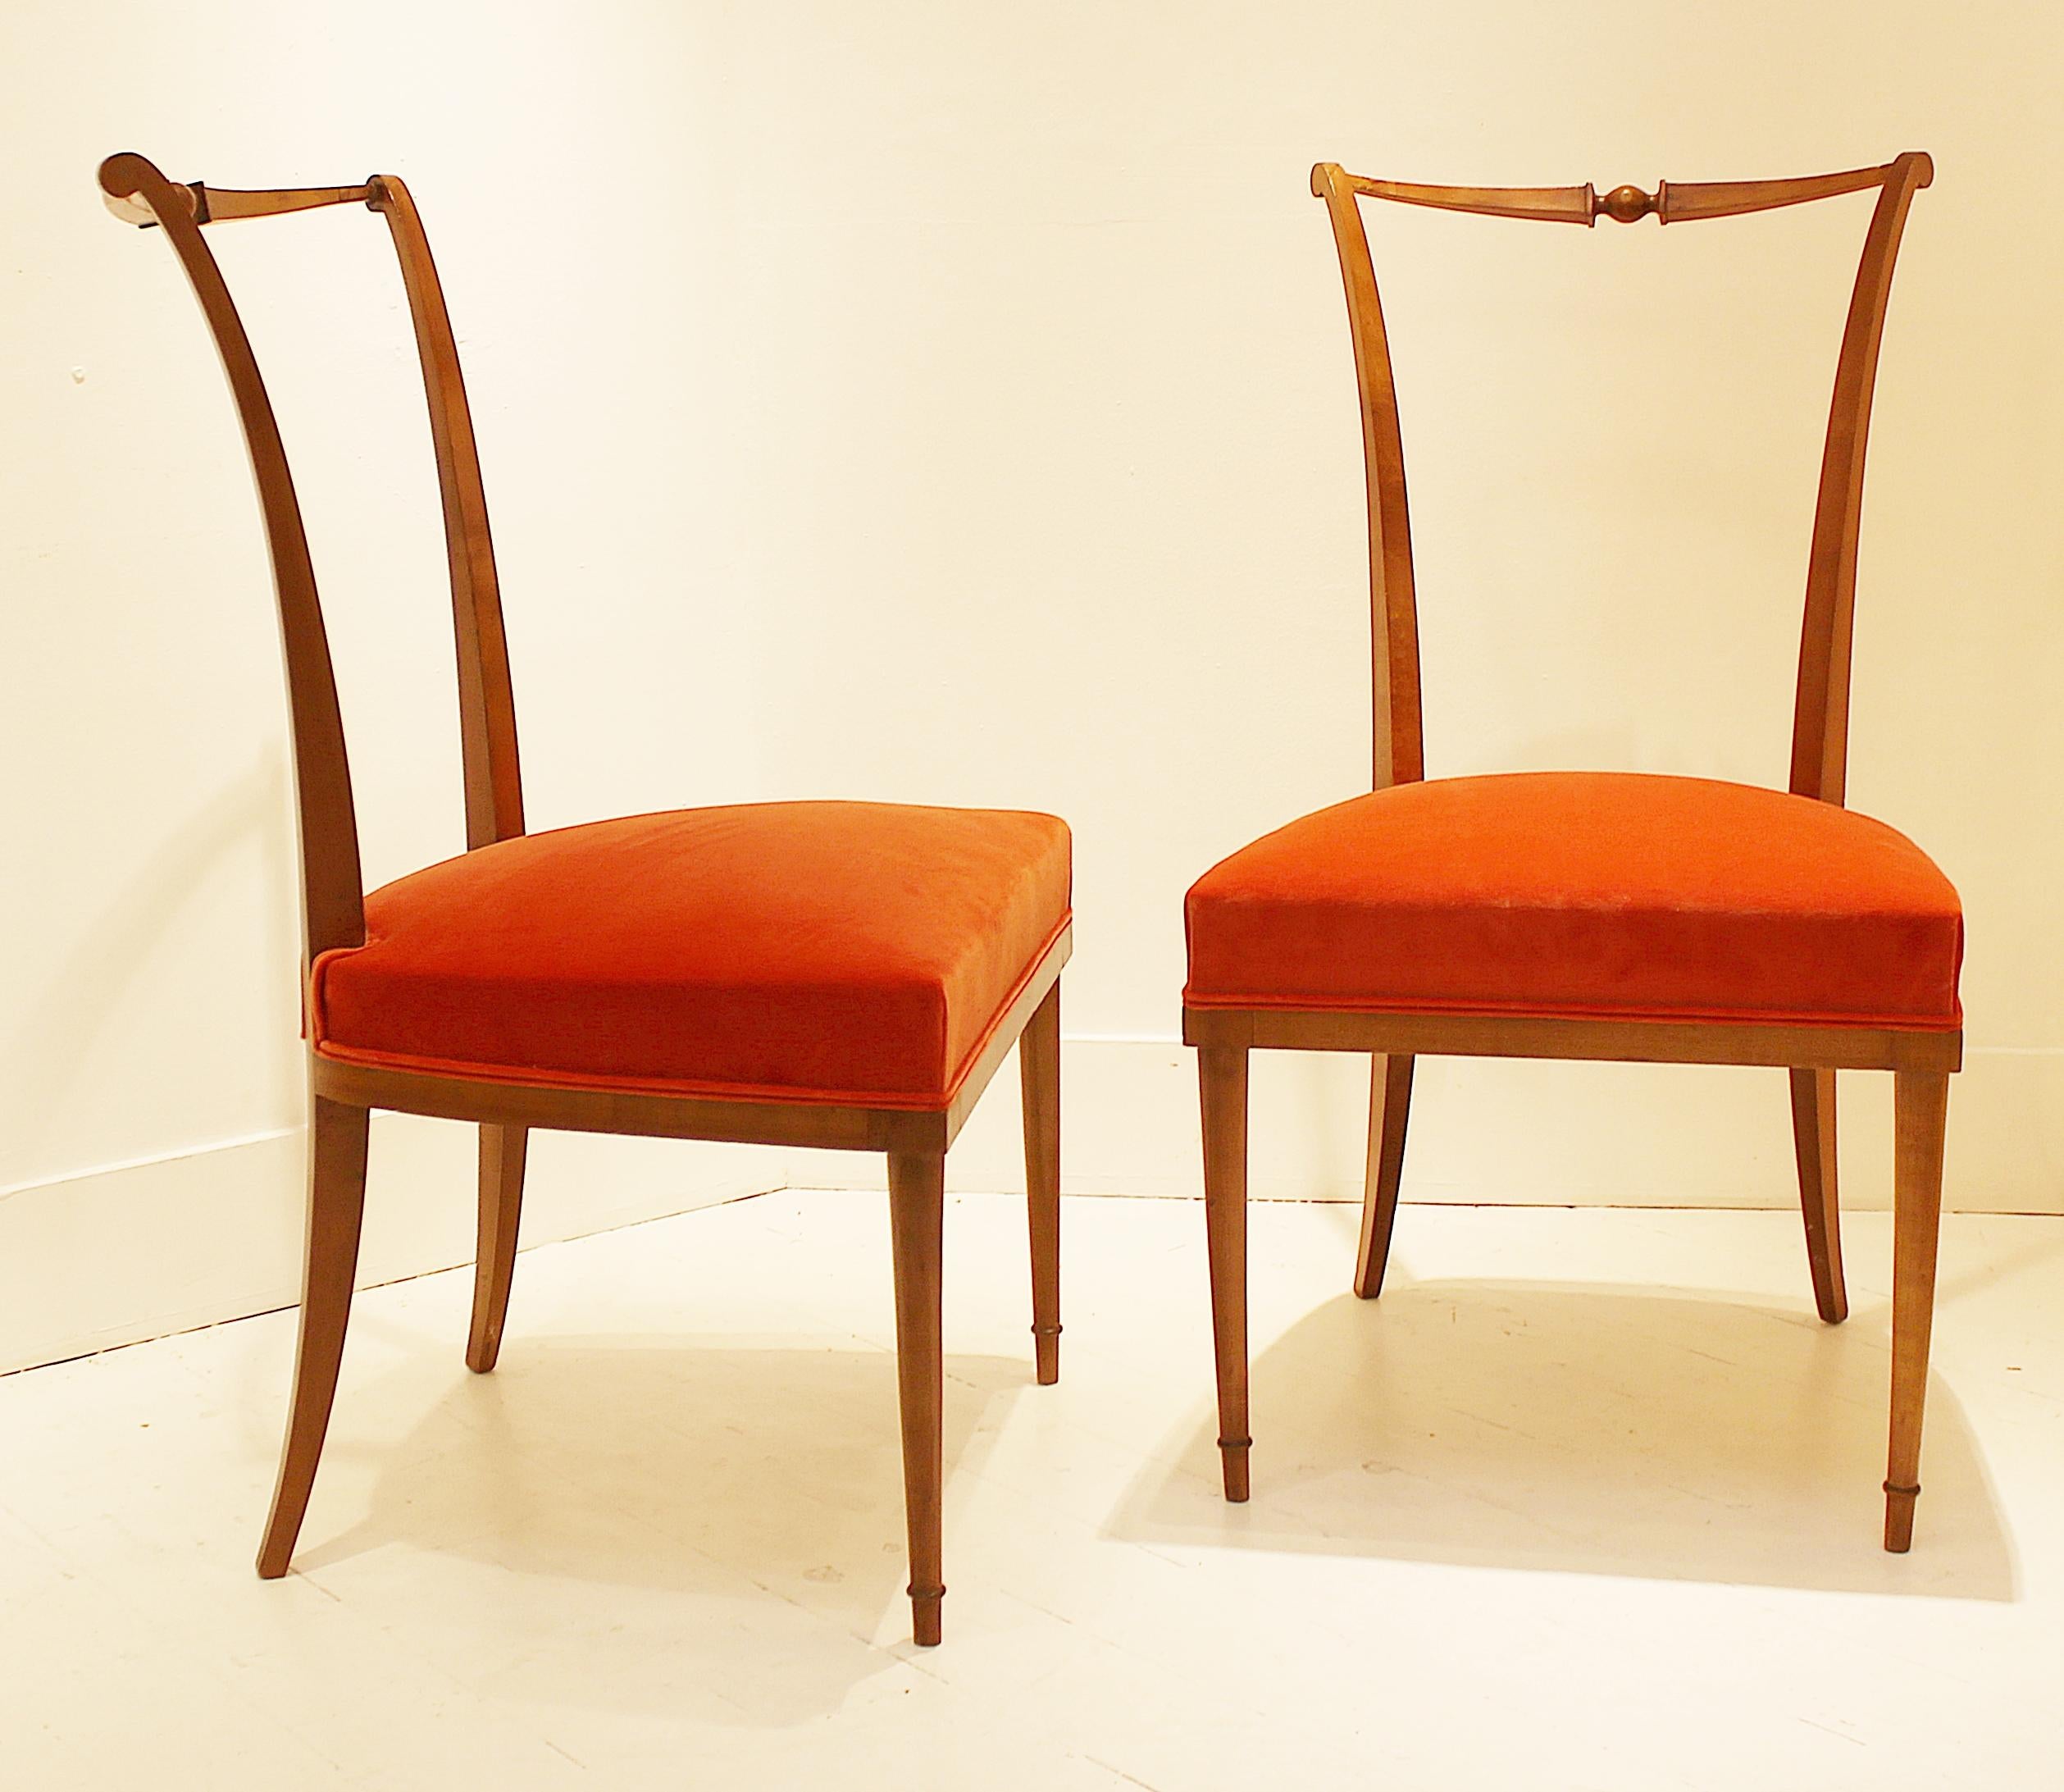 Pair of dining chairs by Andre Arbus, France, new orange velvet upholstery.